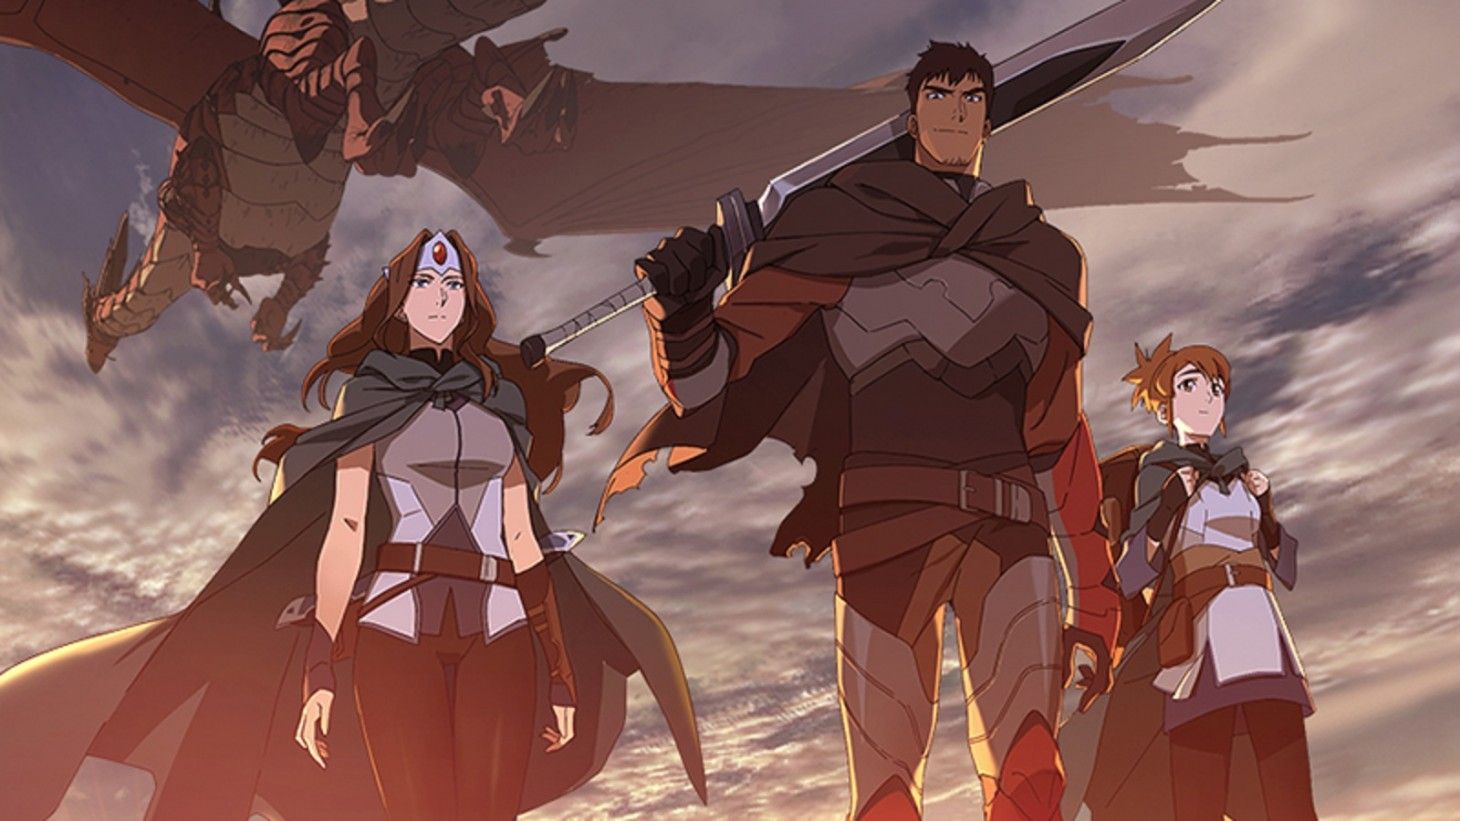 Valve & Netflix Reveal New Anime “DOTA: Dragon's Blood” Based On Dota 2